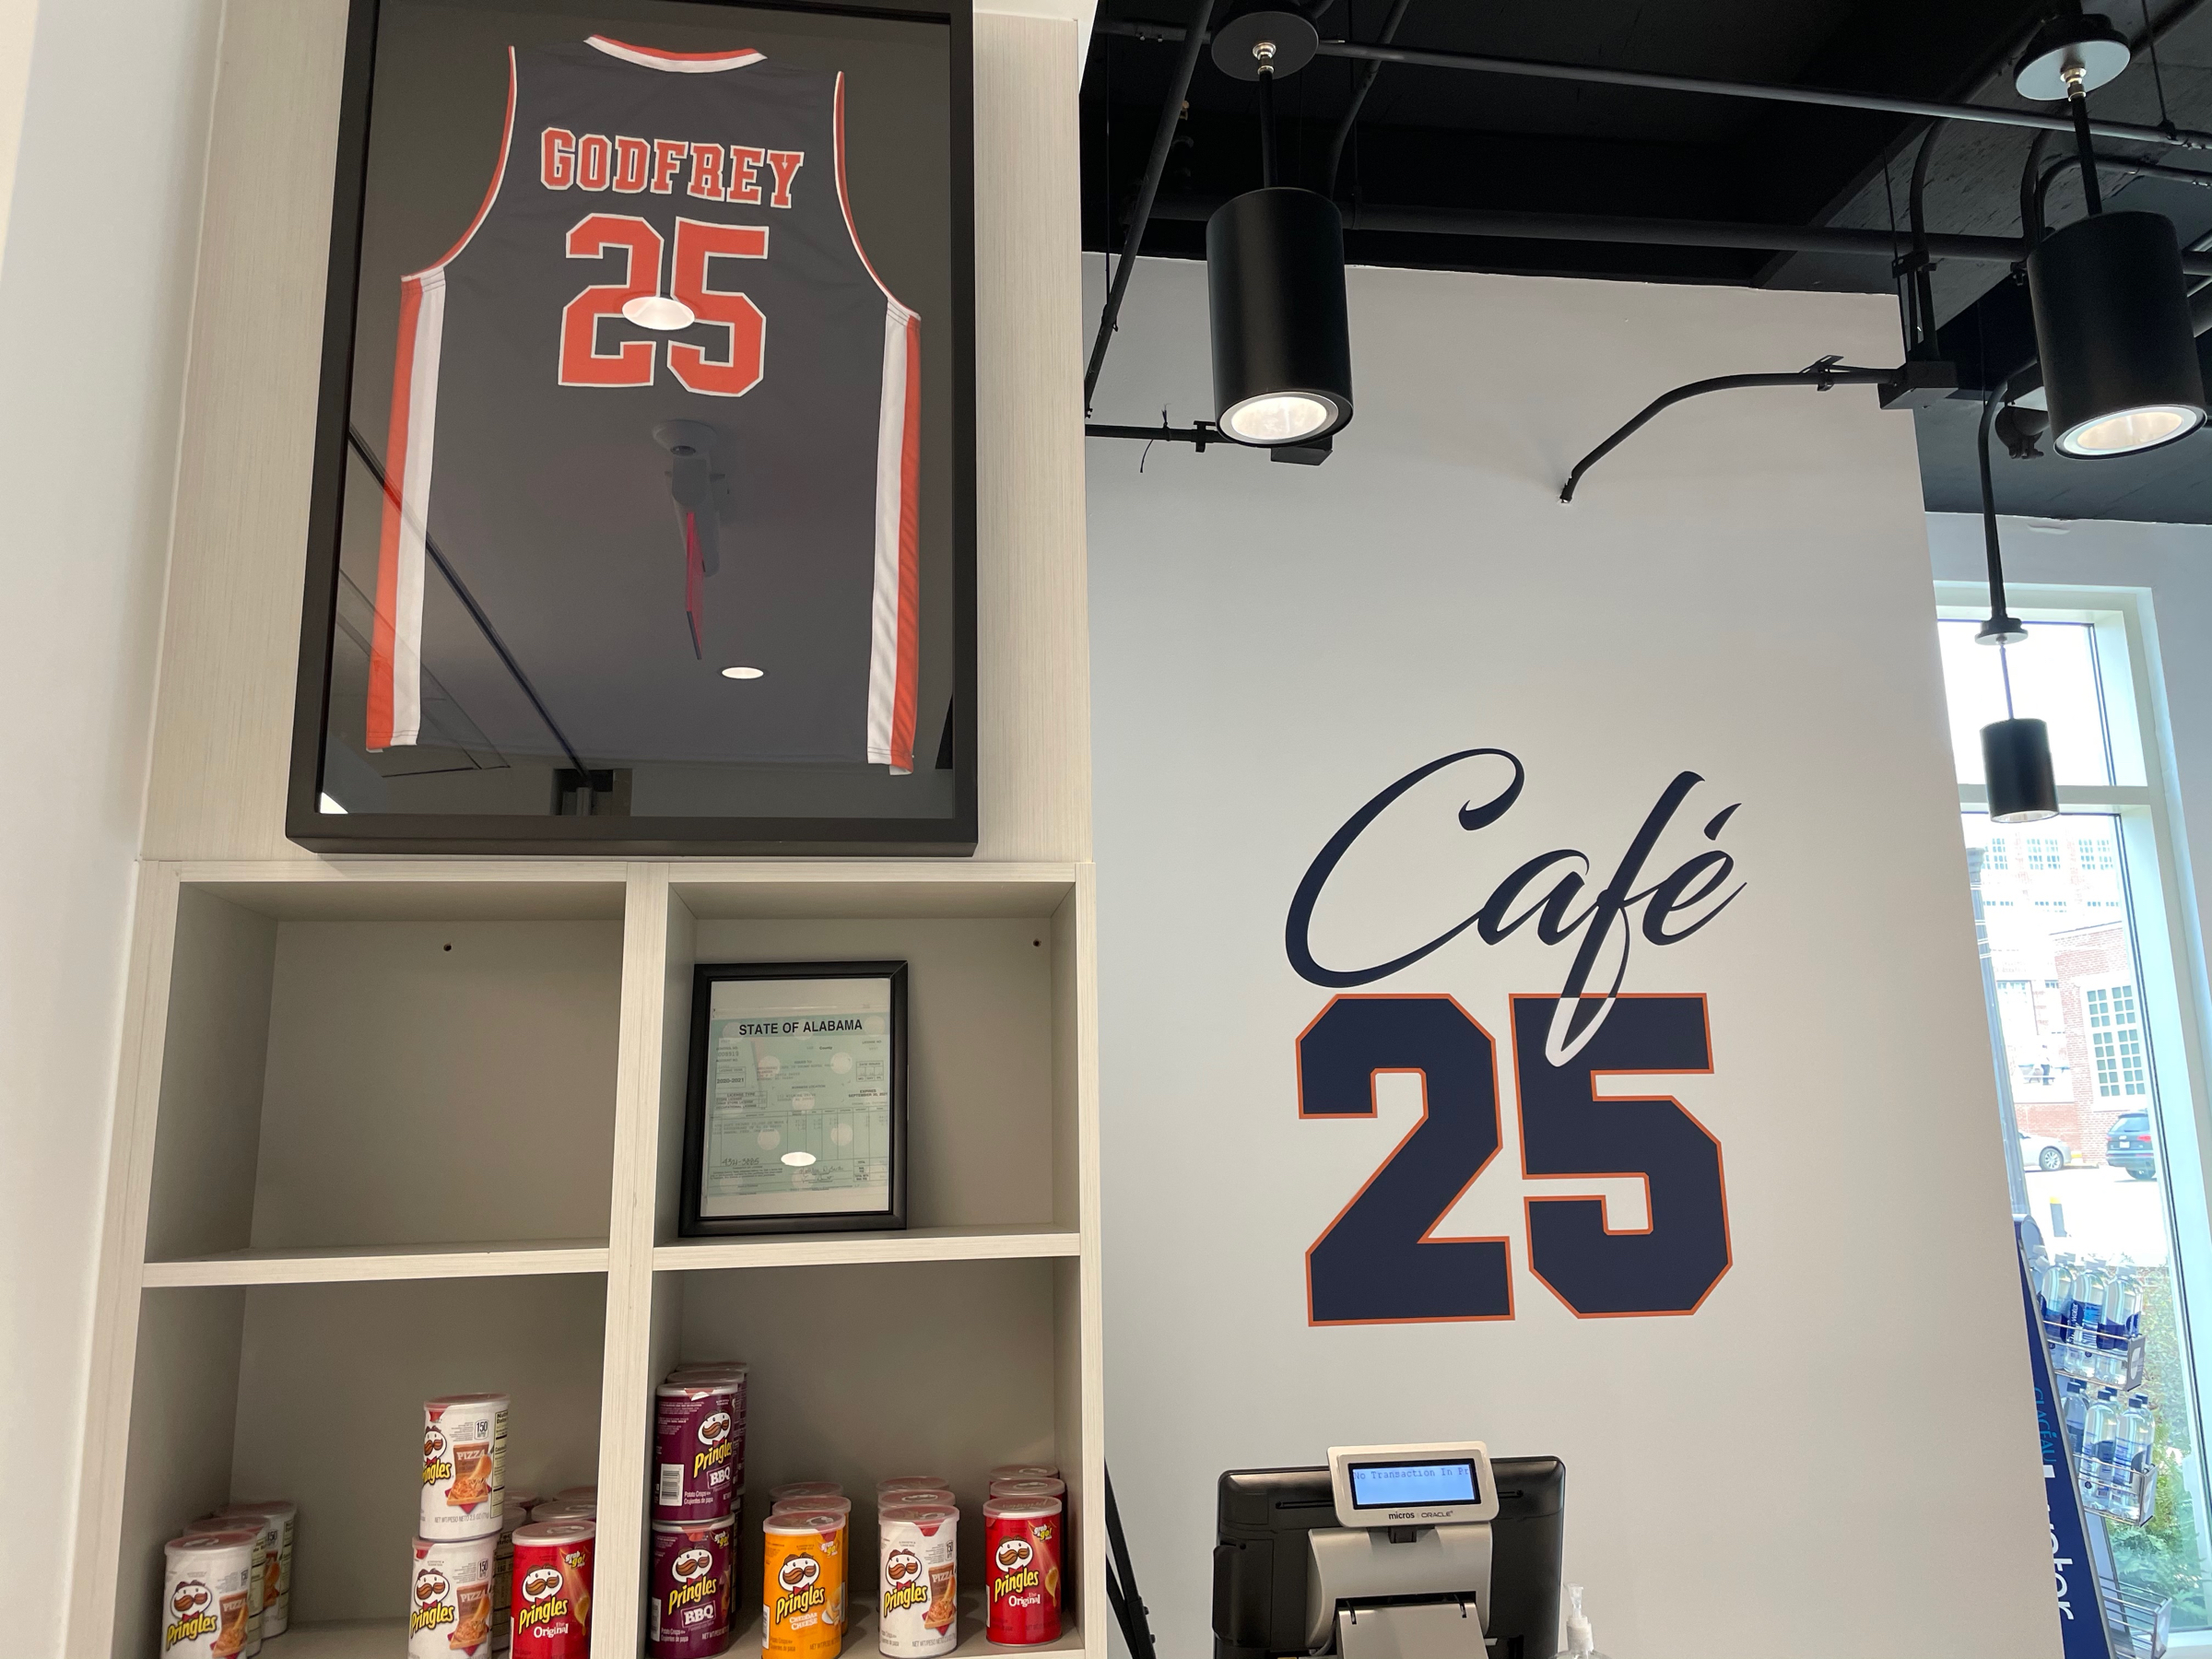 Gary Godfrey's Auburn Basketball jersey at Café 25